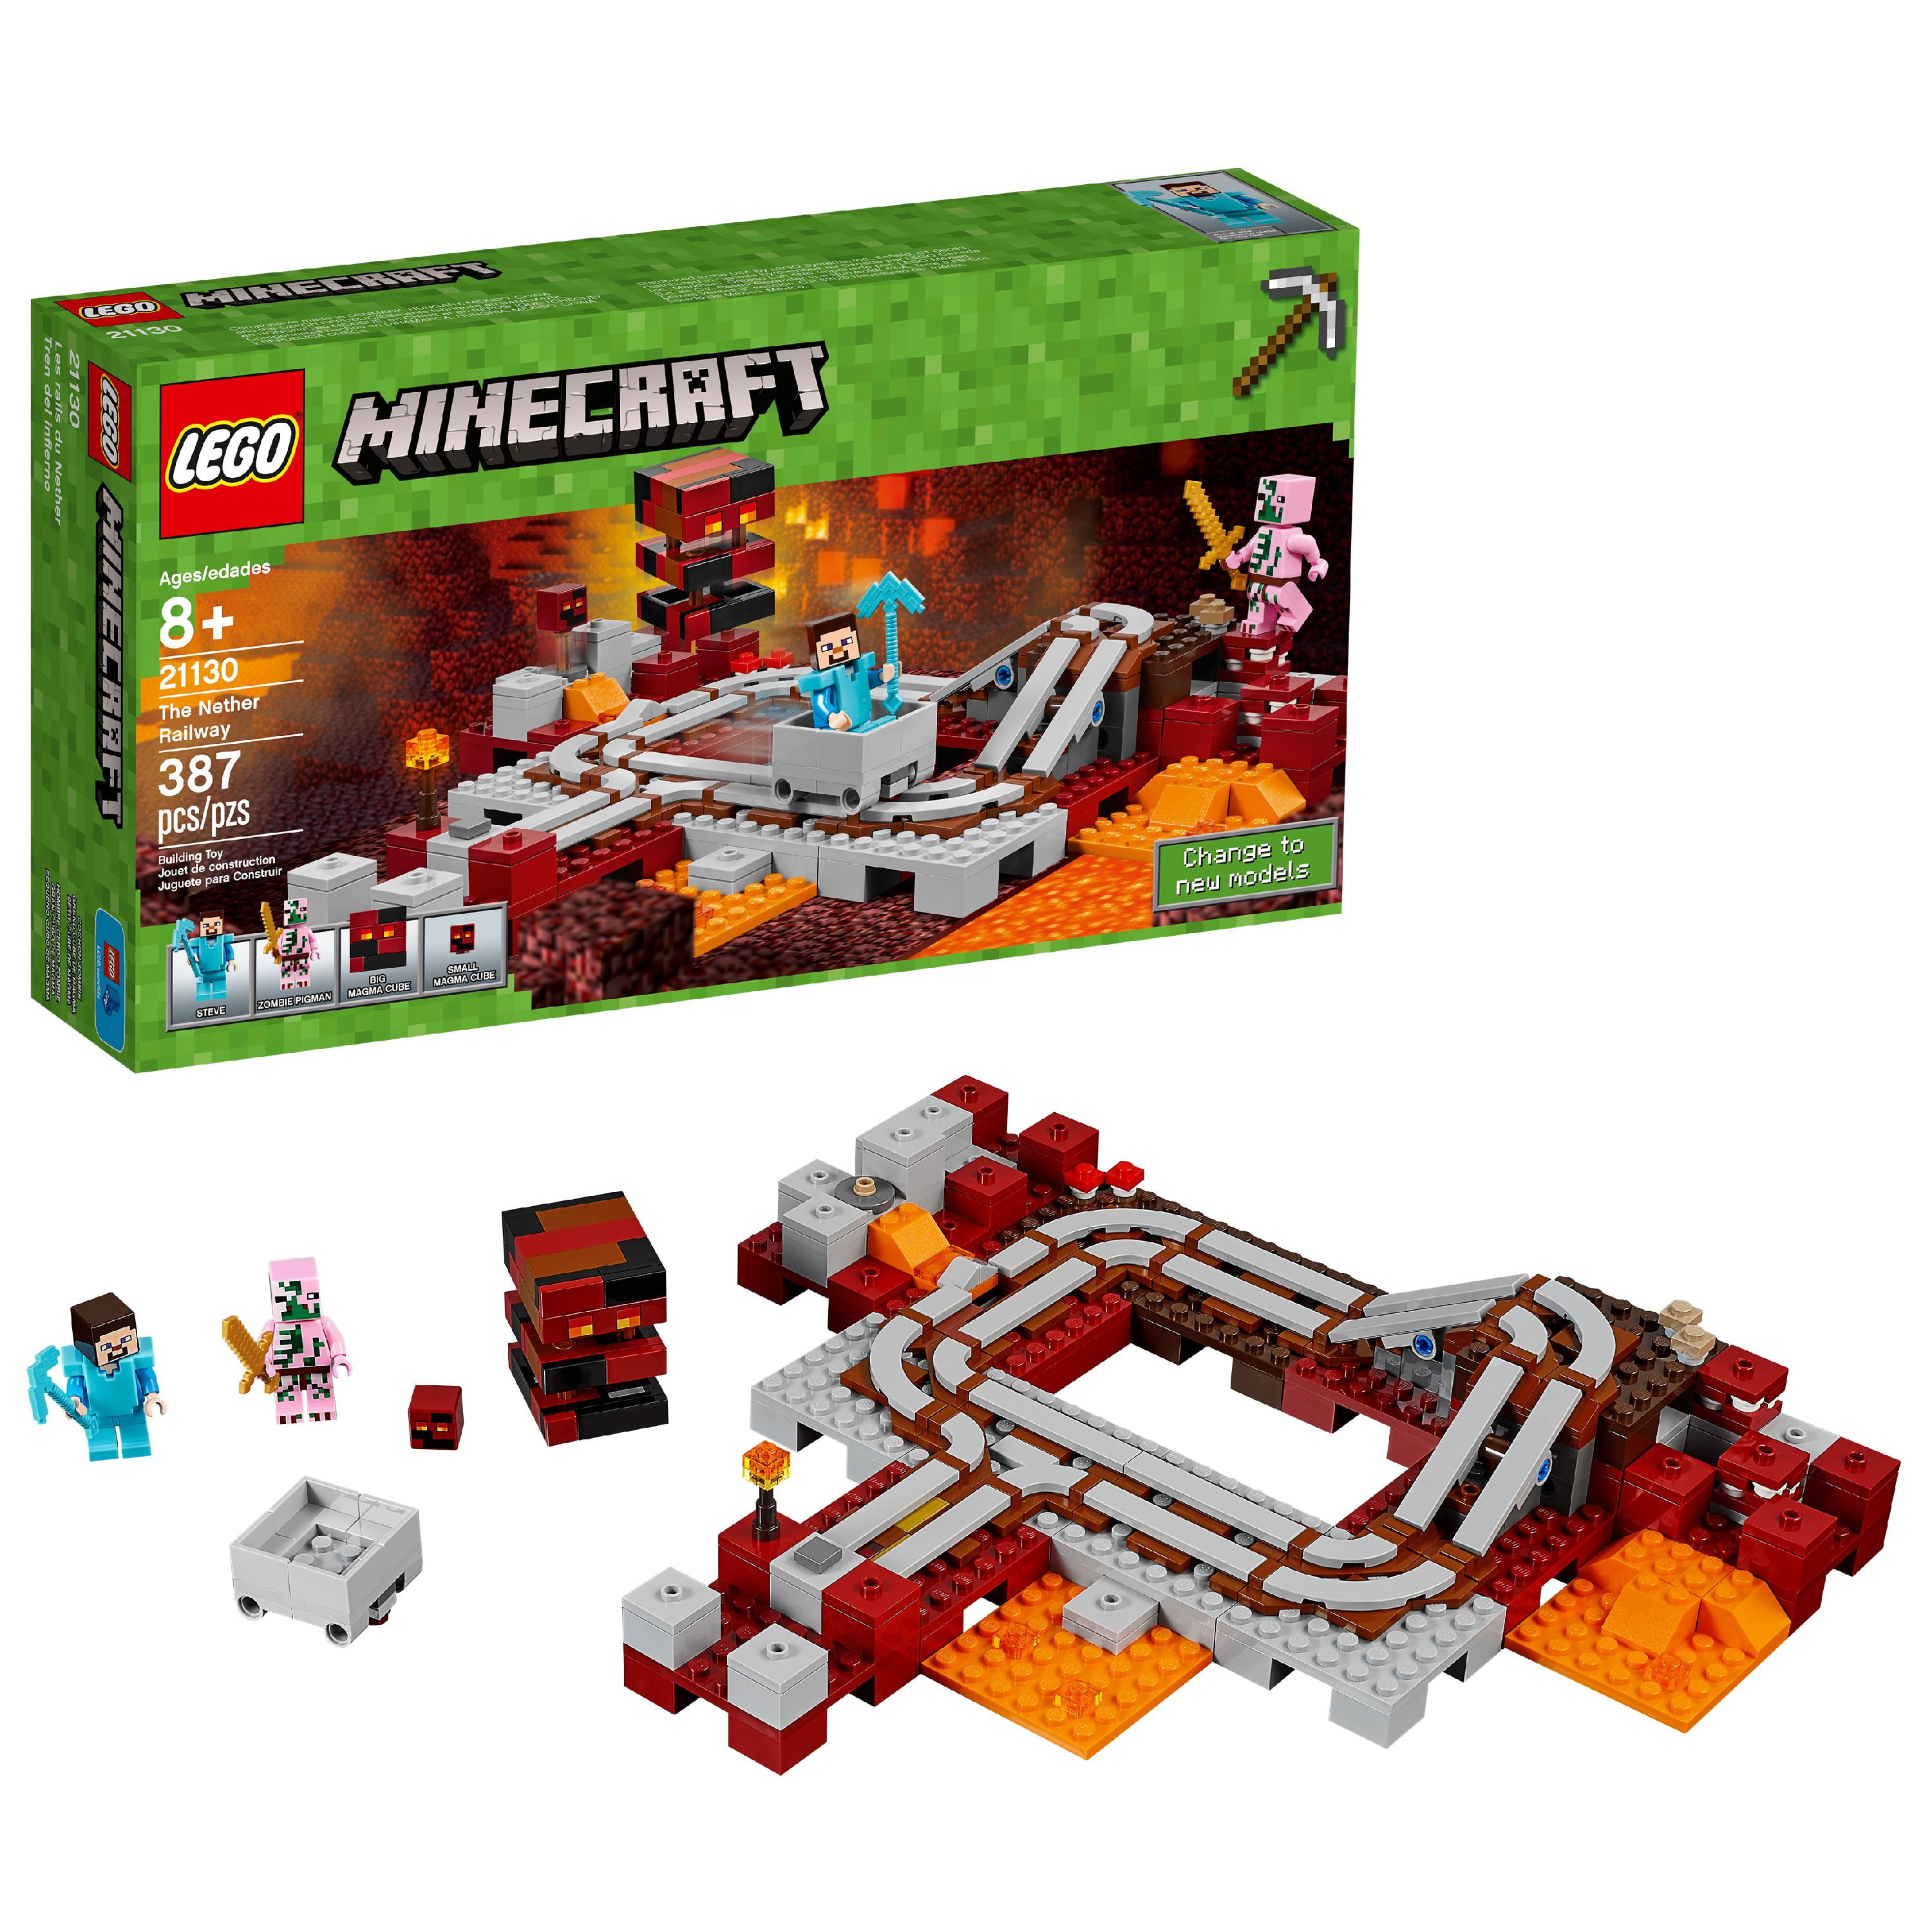 Lego Minecraft The Nether Railway 21130 387 Pieces Walmart Com Walmart Com